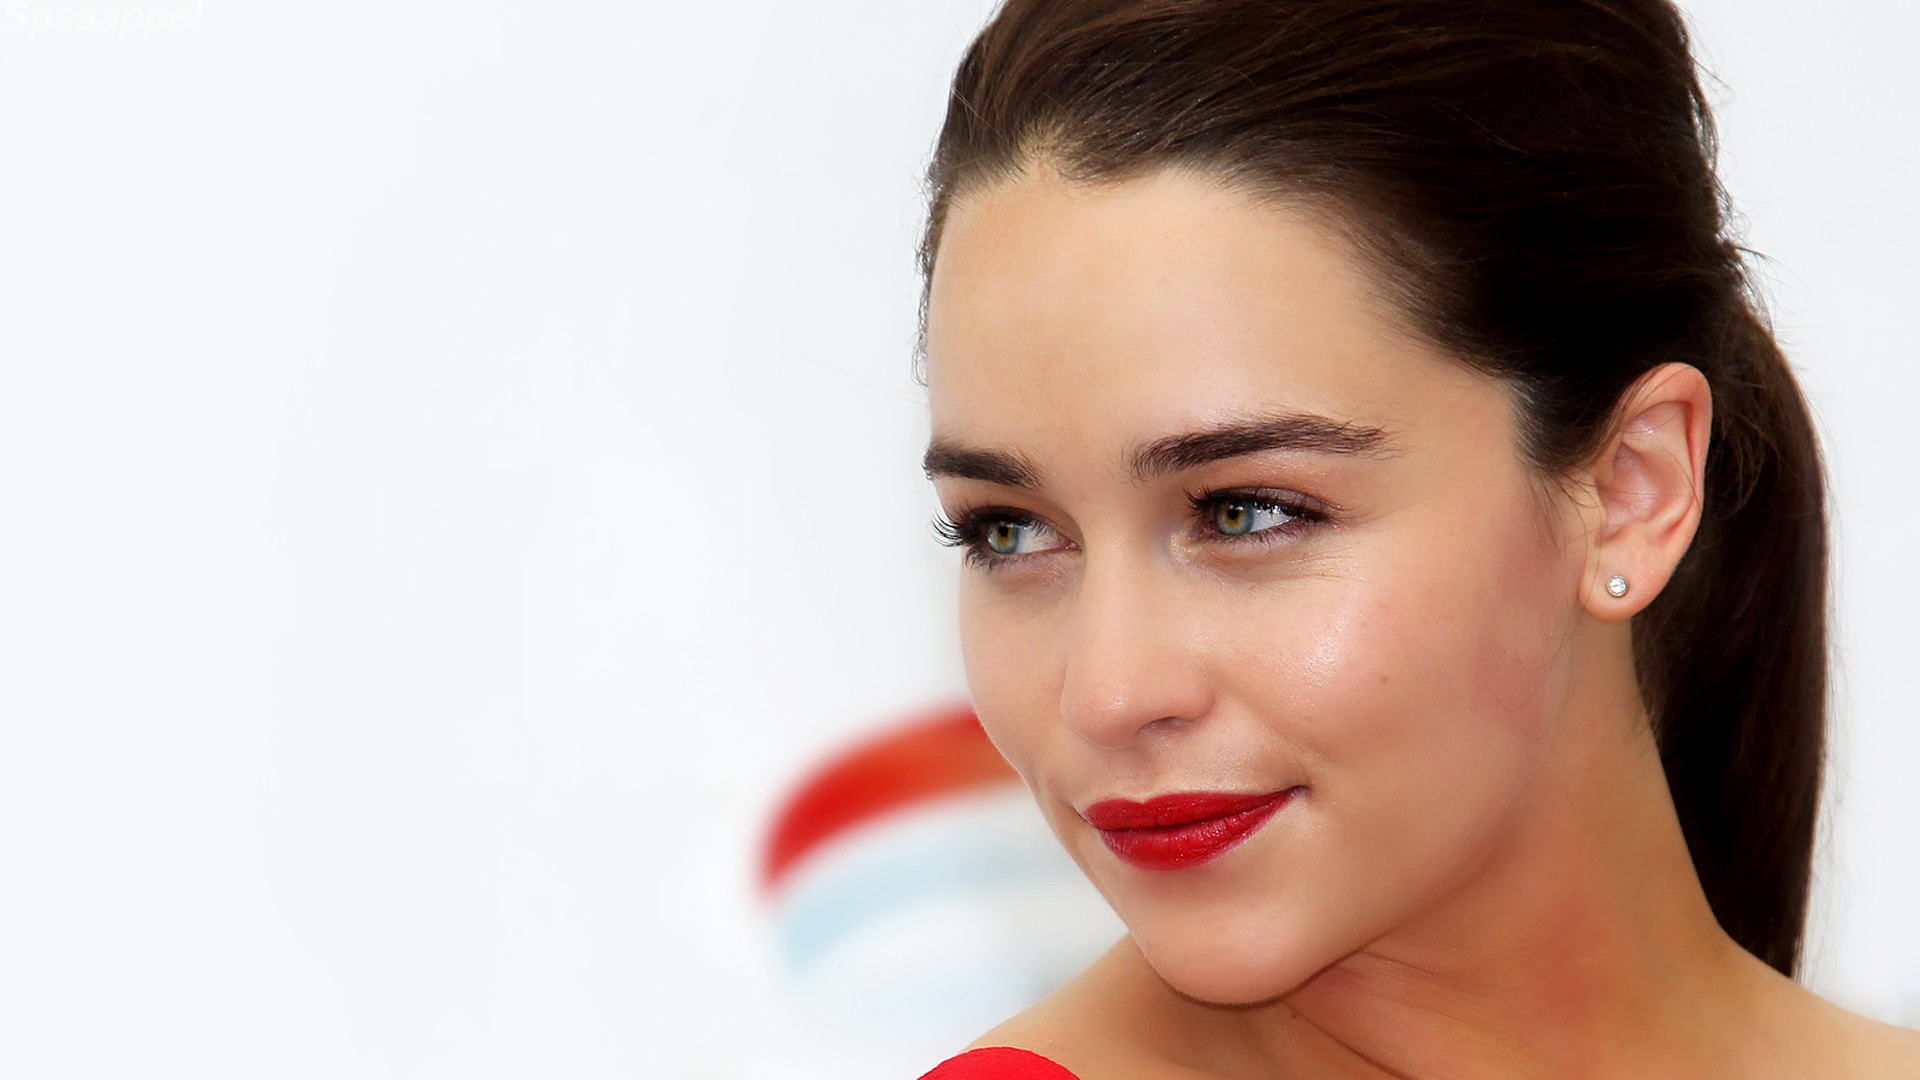 Wonderful Emilia Clarke Beautiful Eye And Attractive Lips Still Free Desktop Hd Mobile Background Images